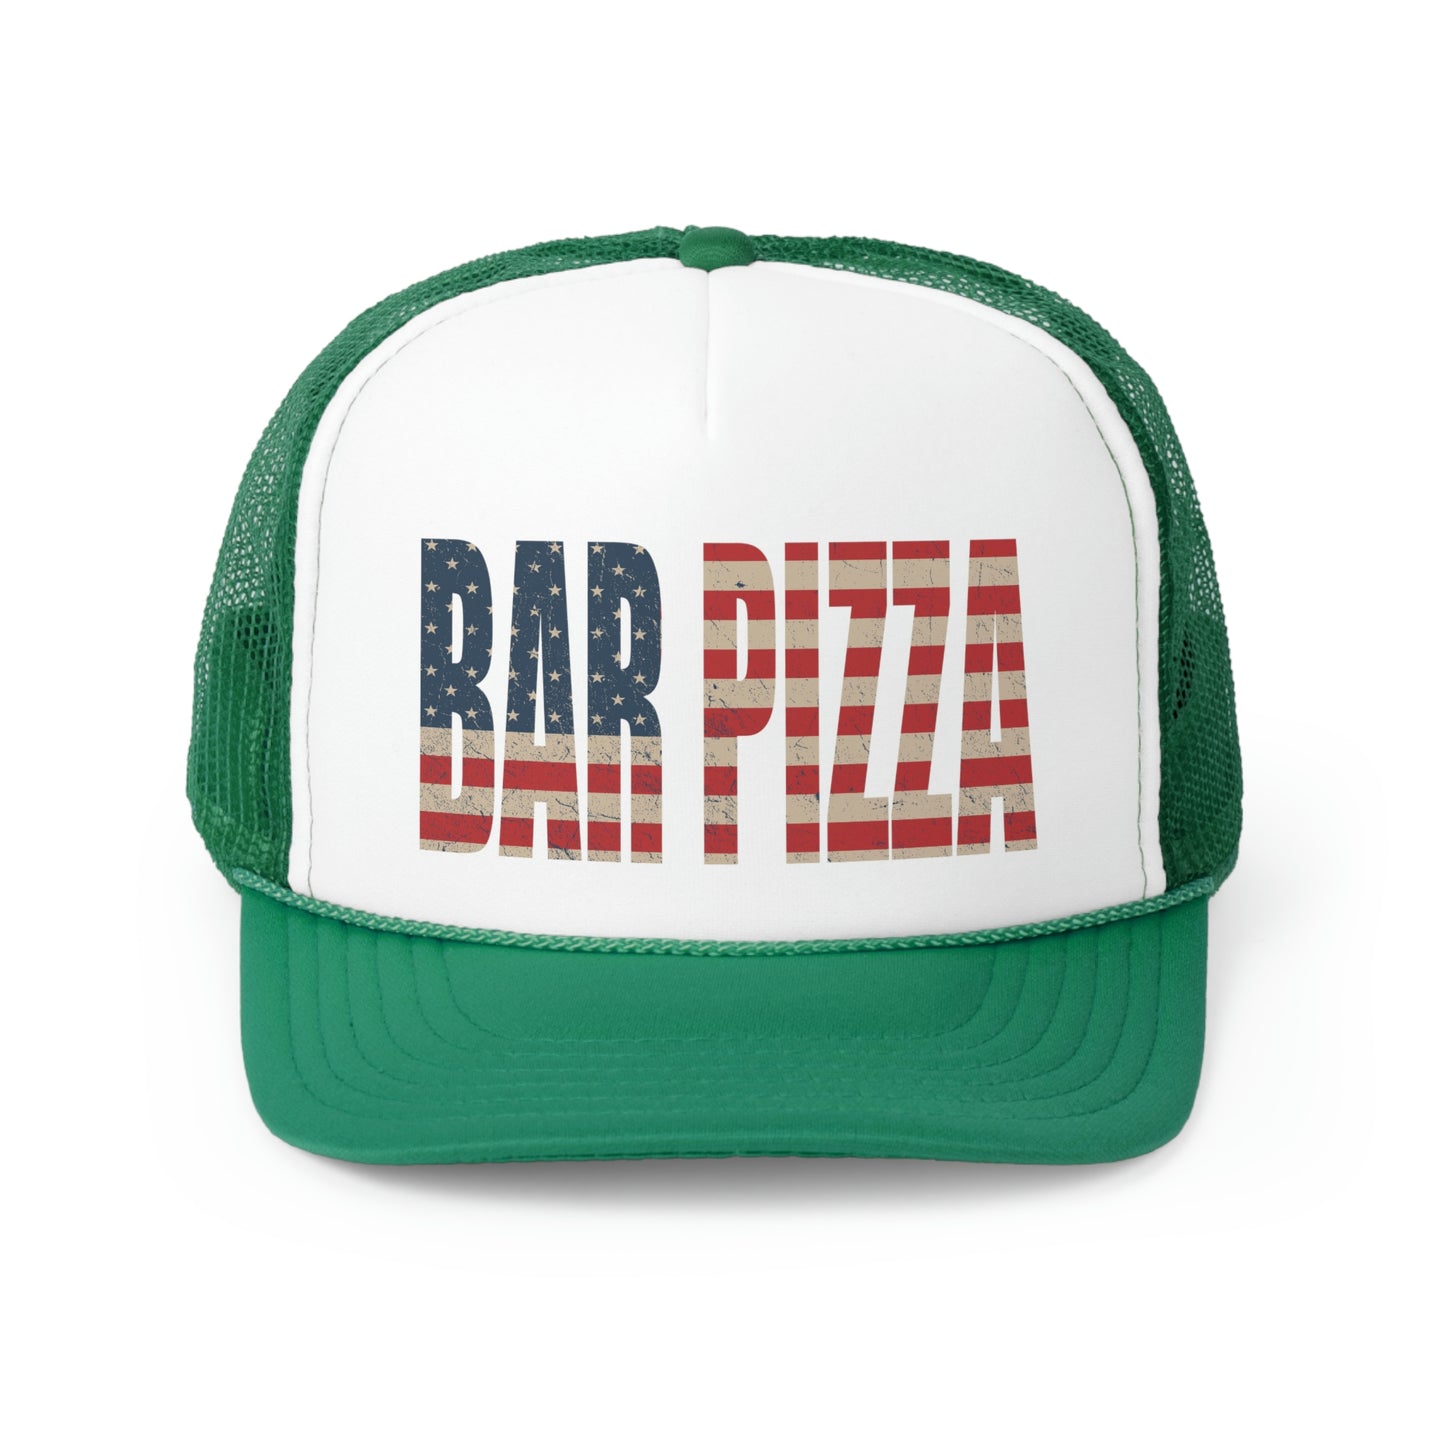 All American Bar Pizza Trucker Hat